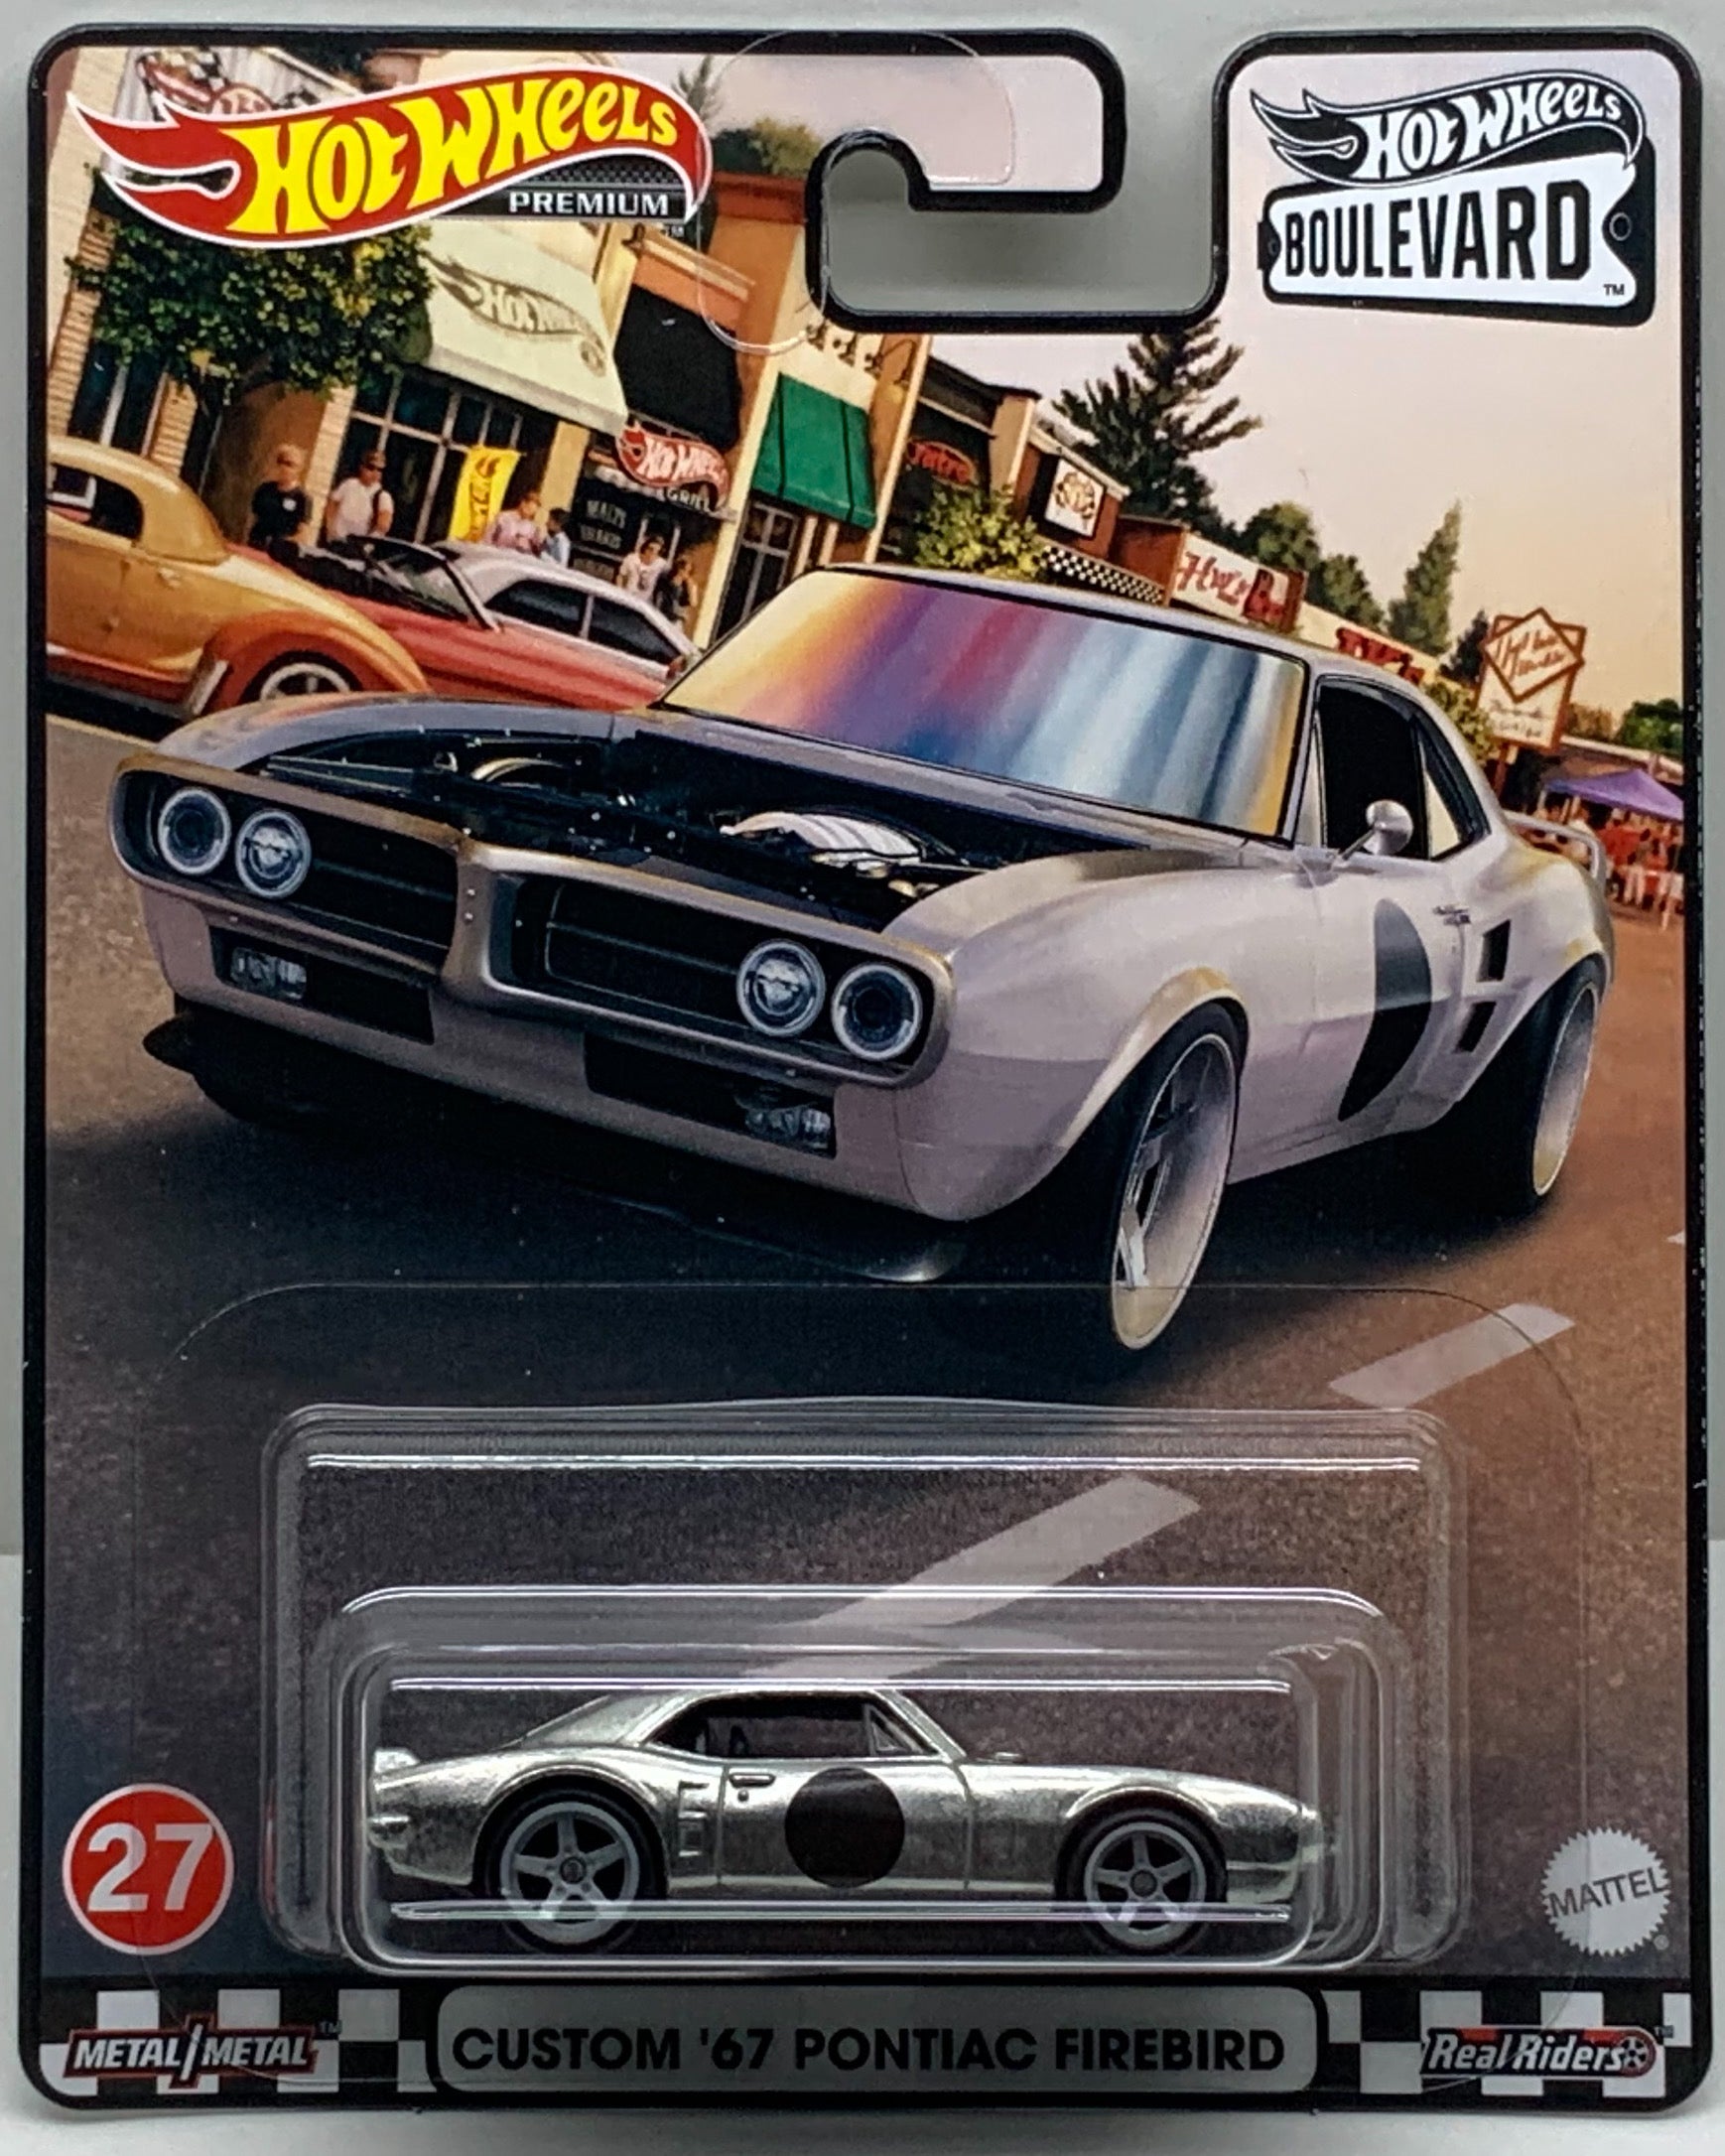 Buy at Tatoy Hot Wheels Boulevard Custom '67 Pontiac Firebird number 27 Premium Real Riders Metal Mattel GJT68